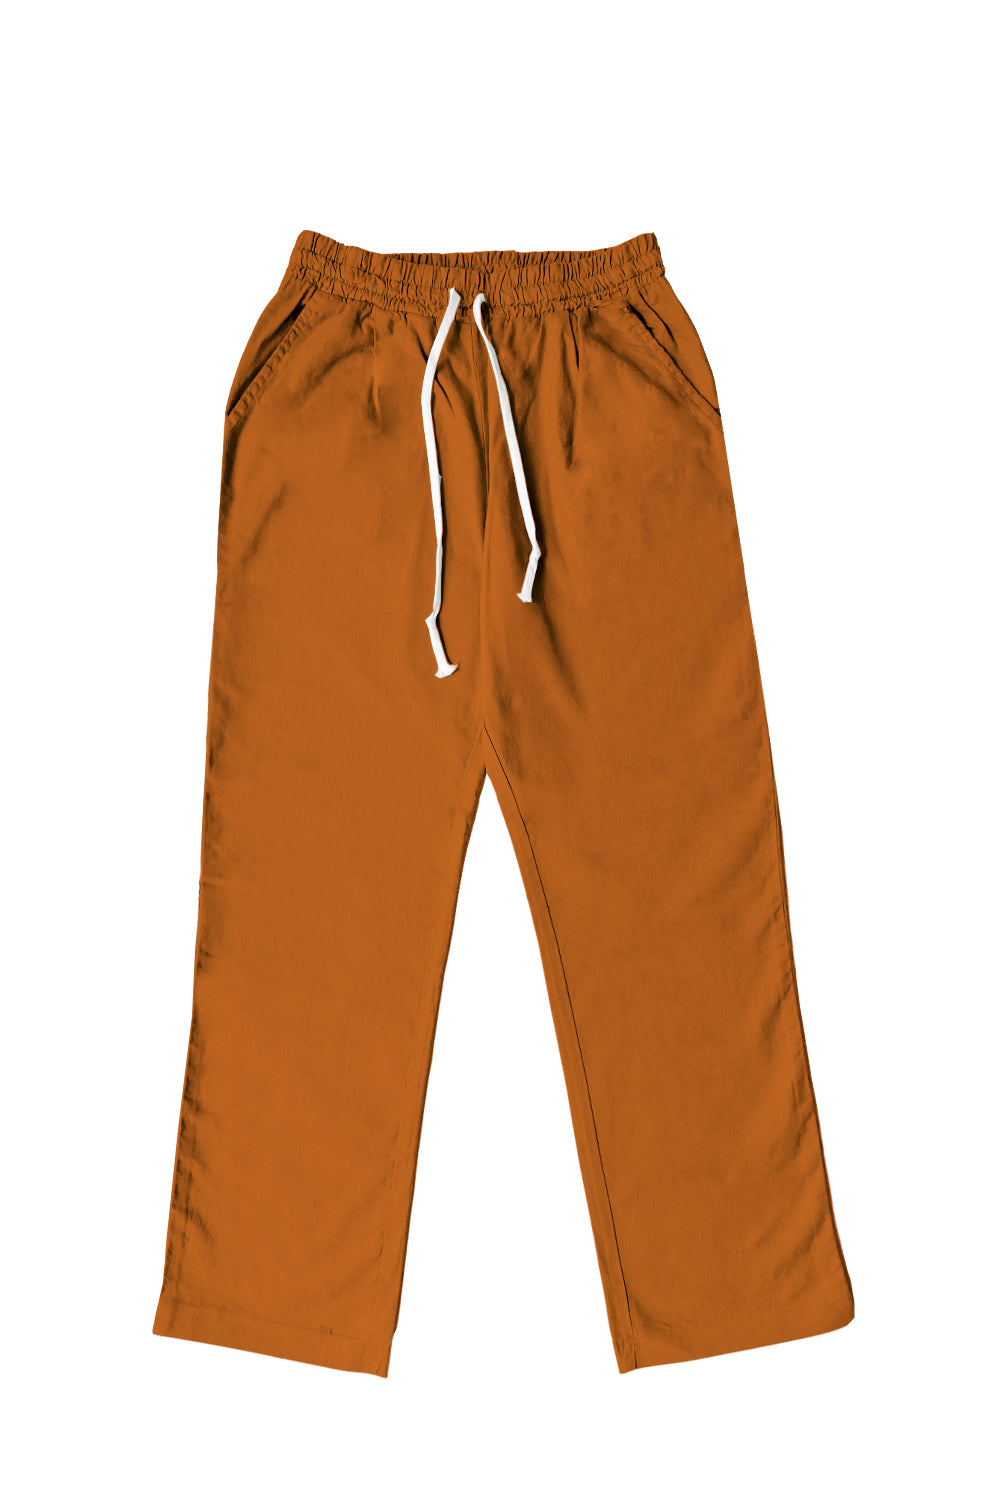 pantalón unisex hecho en España  con pierna recta y corte regular en color naranja oxido